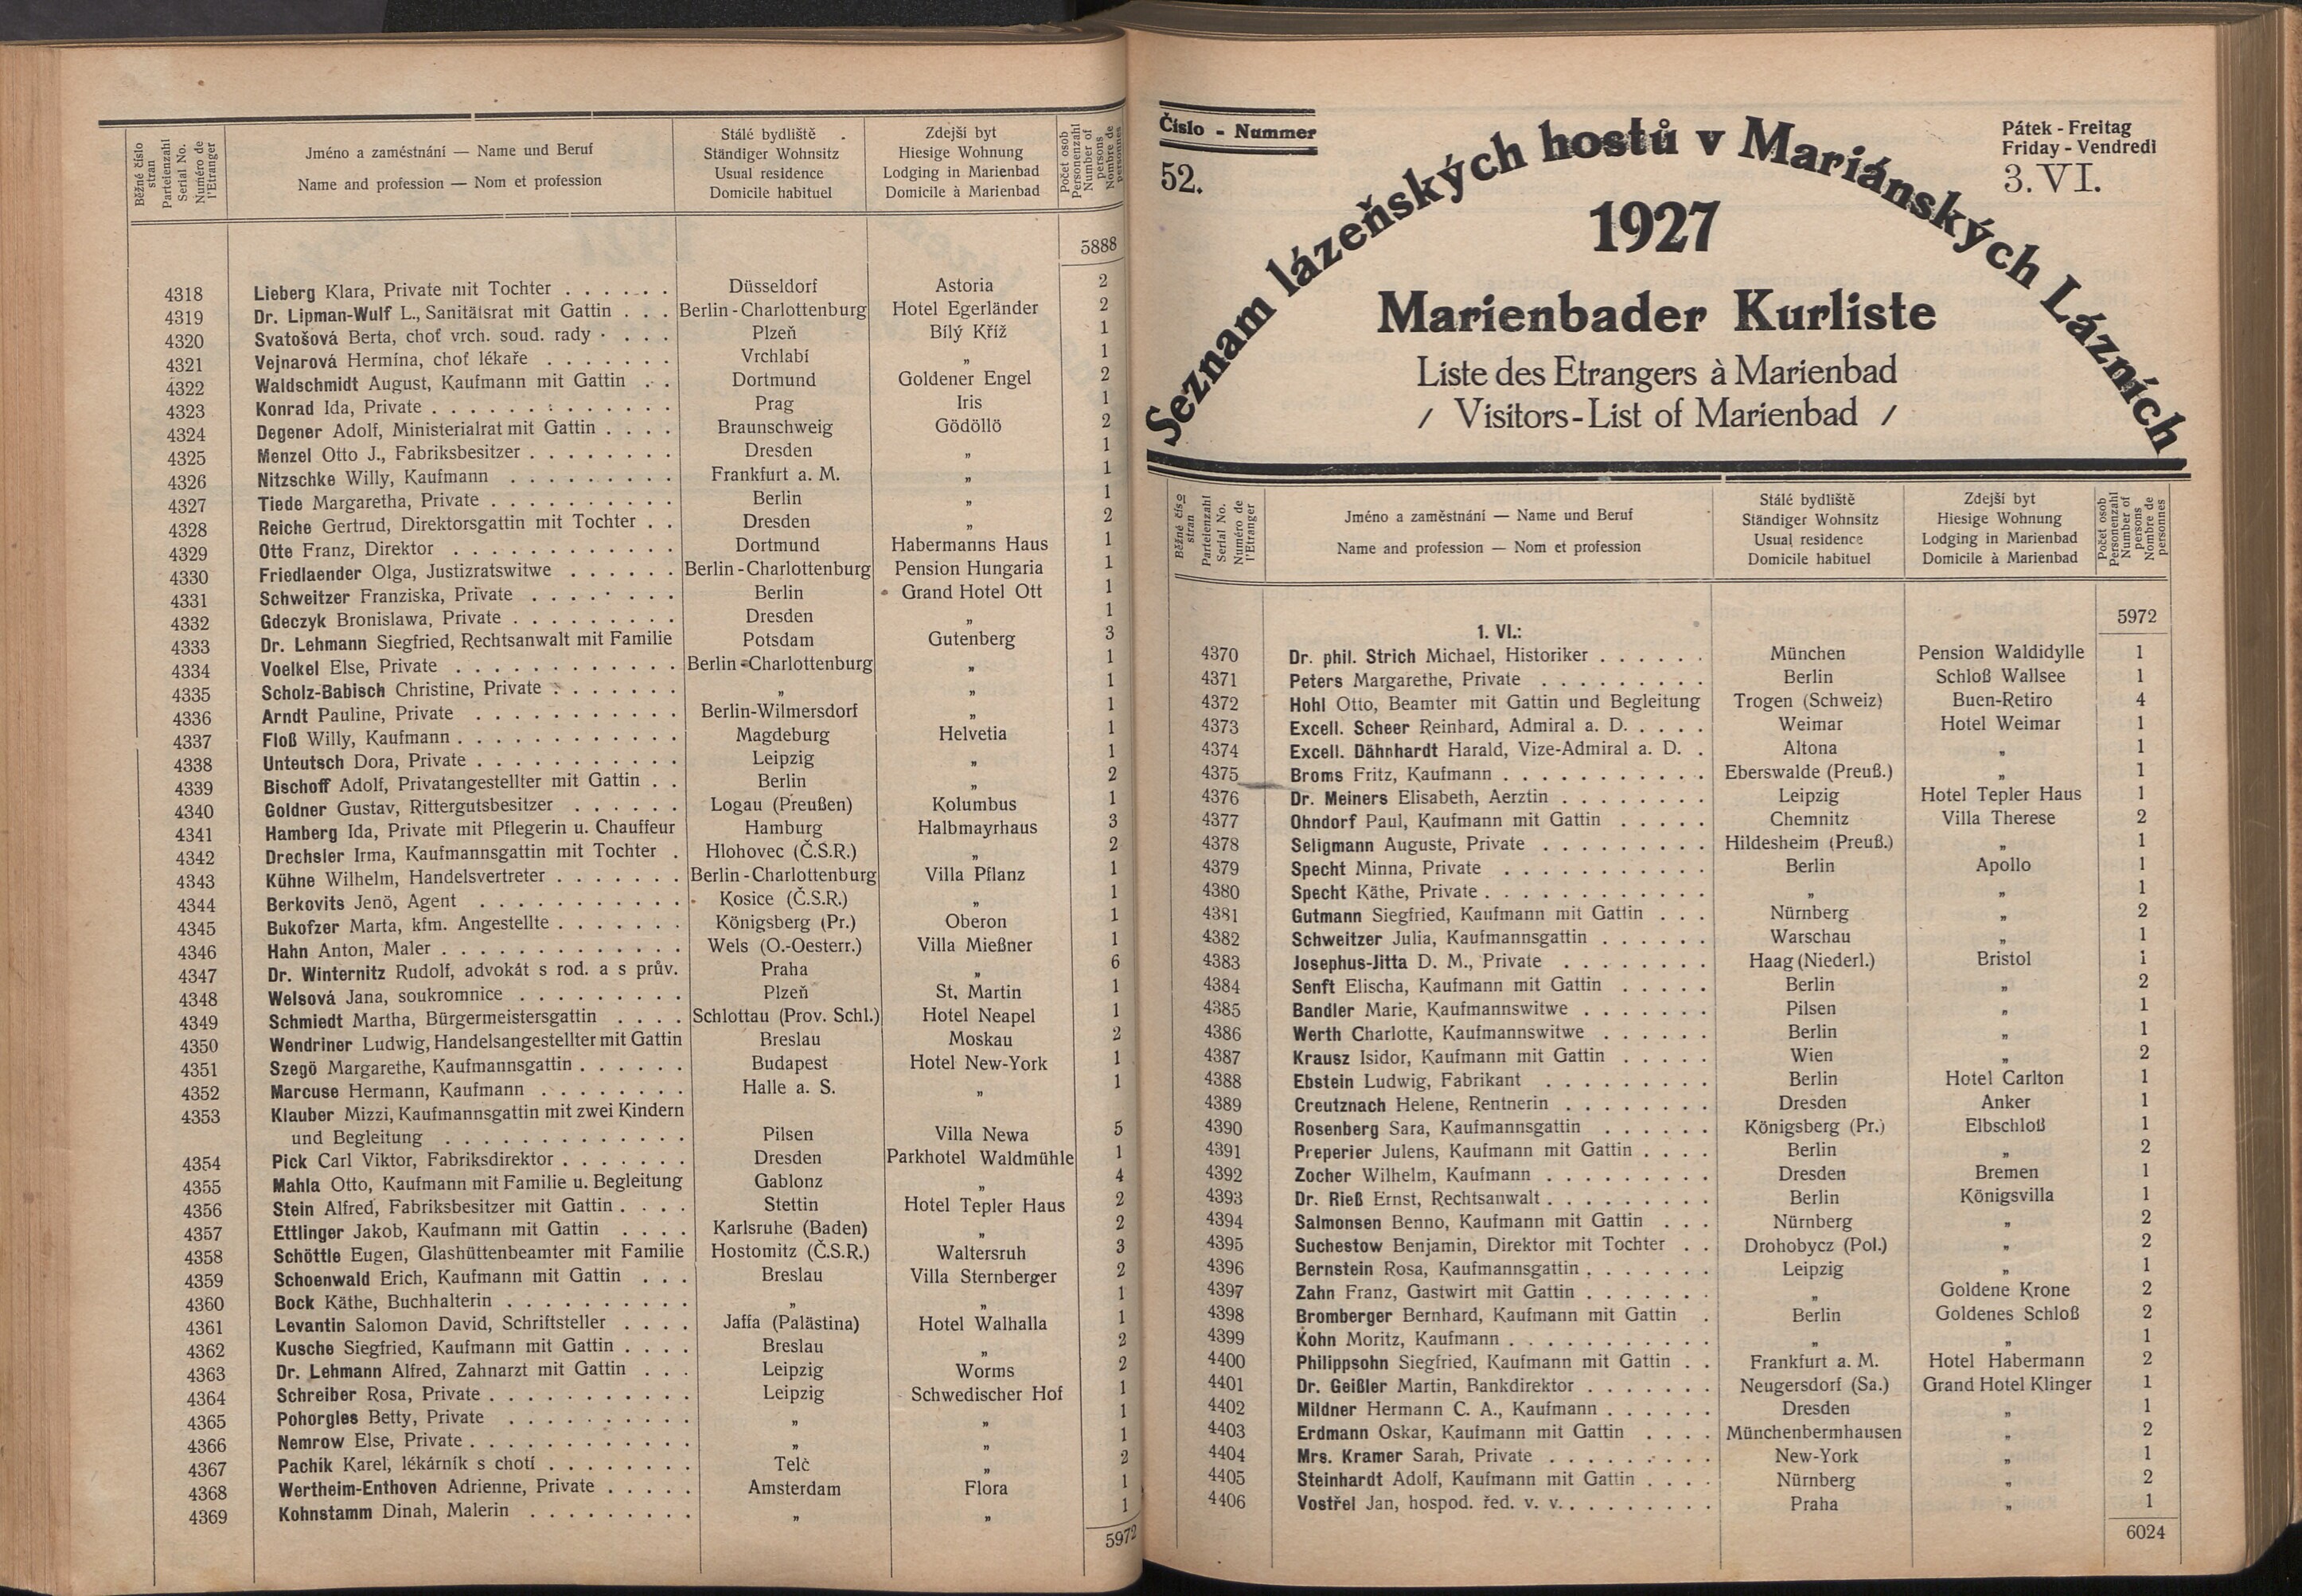 130. soap-ch_knihovna_marienbader-kurliste-1927_1300